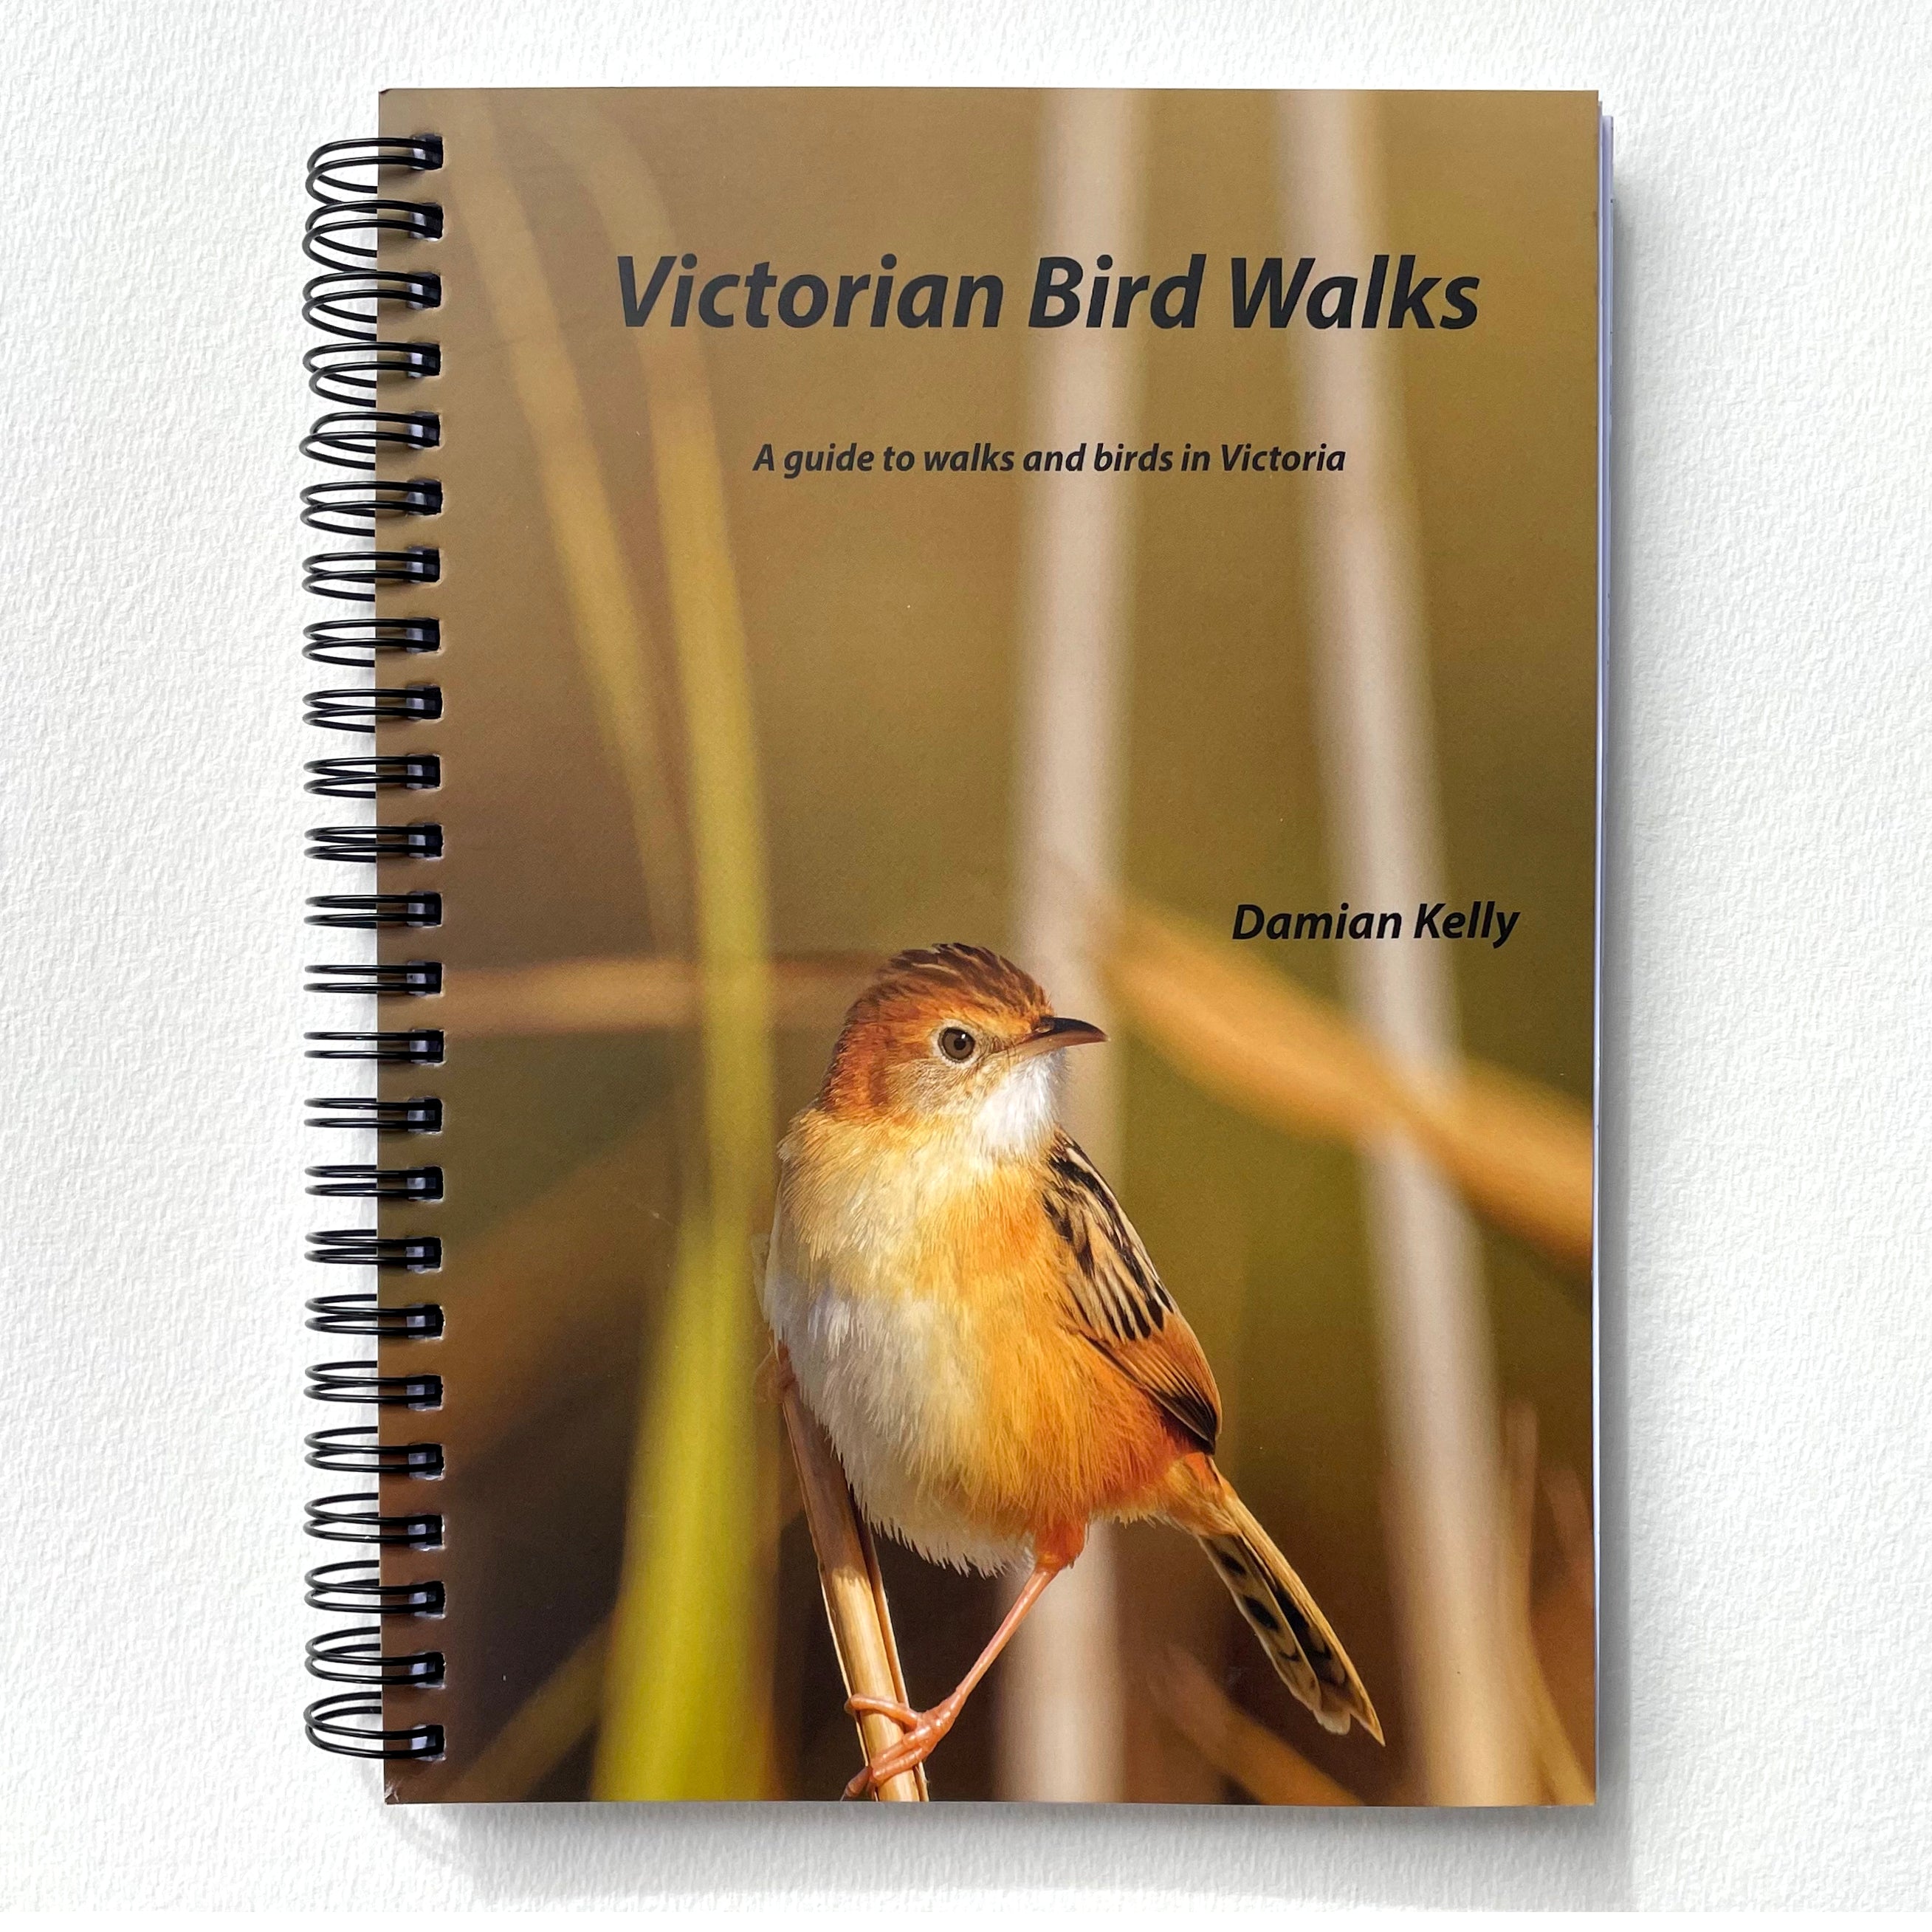 Book - Victorian Bird Walks by Damian Kelly